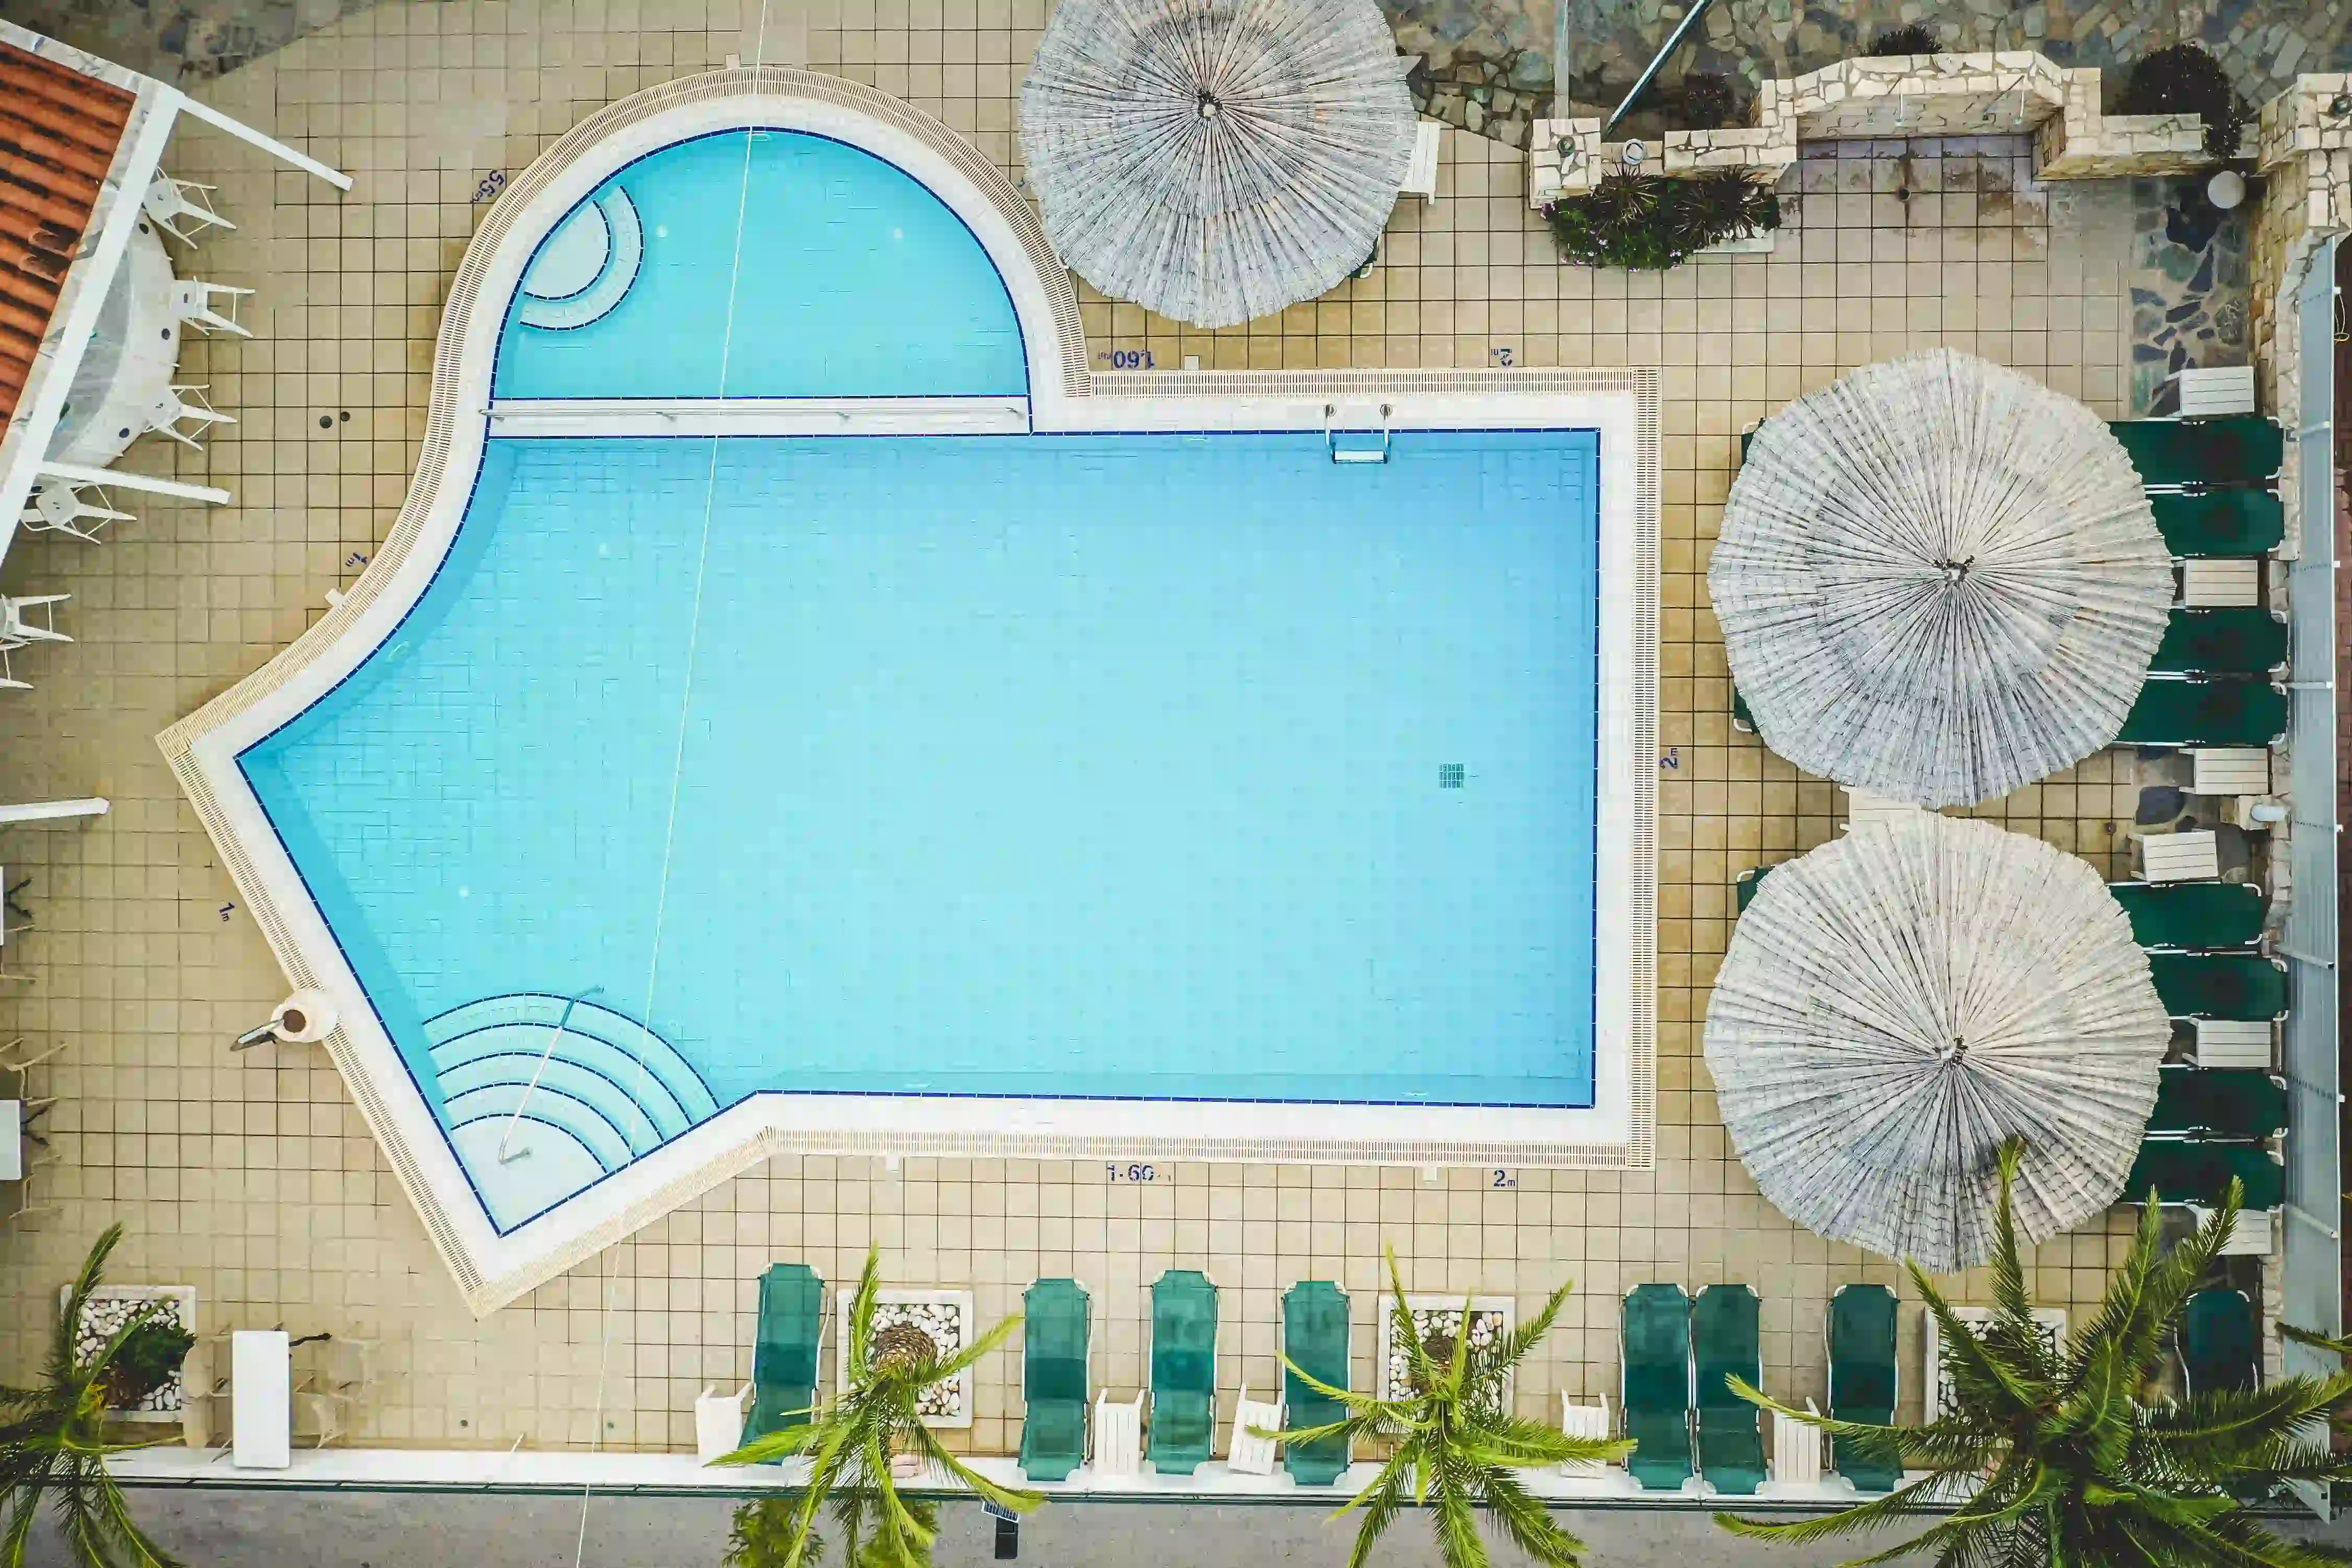 Hotel Swimming Pool Photo